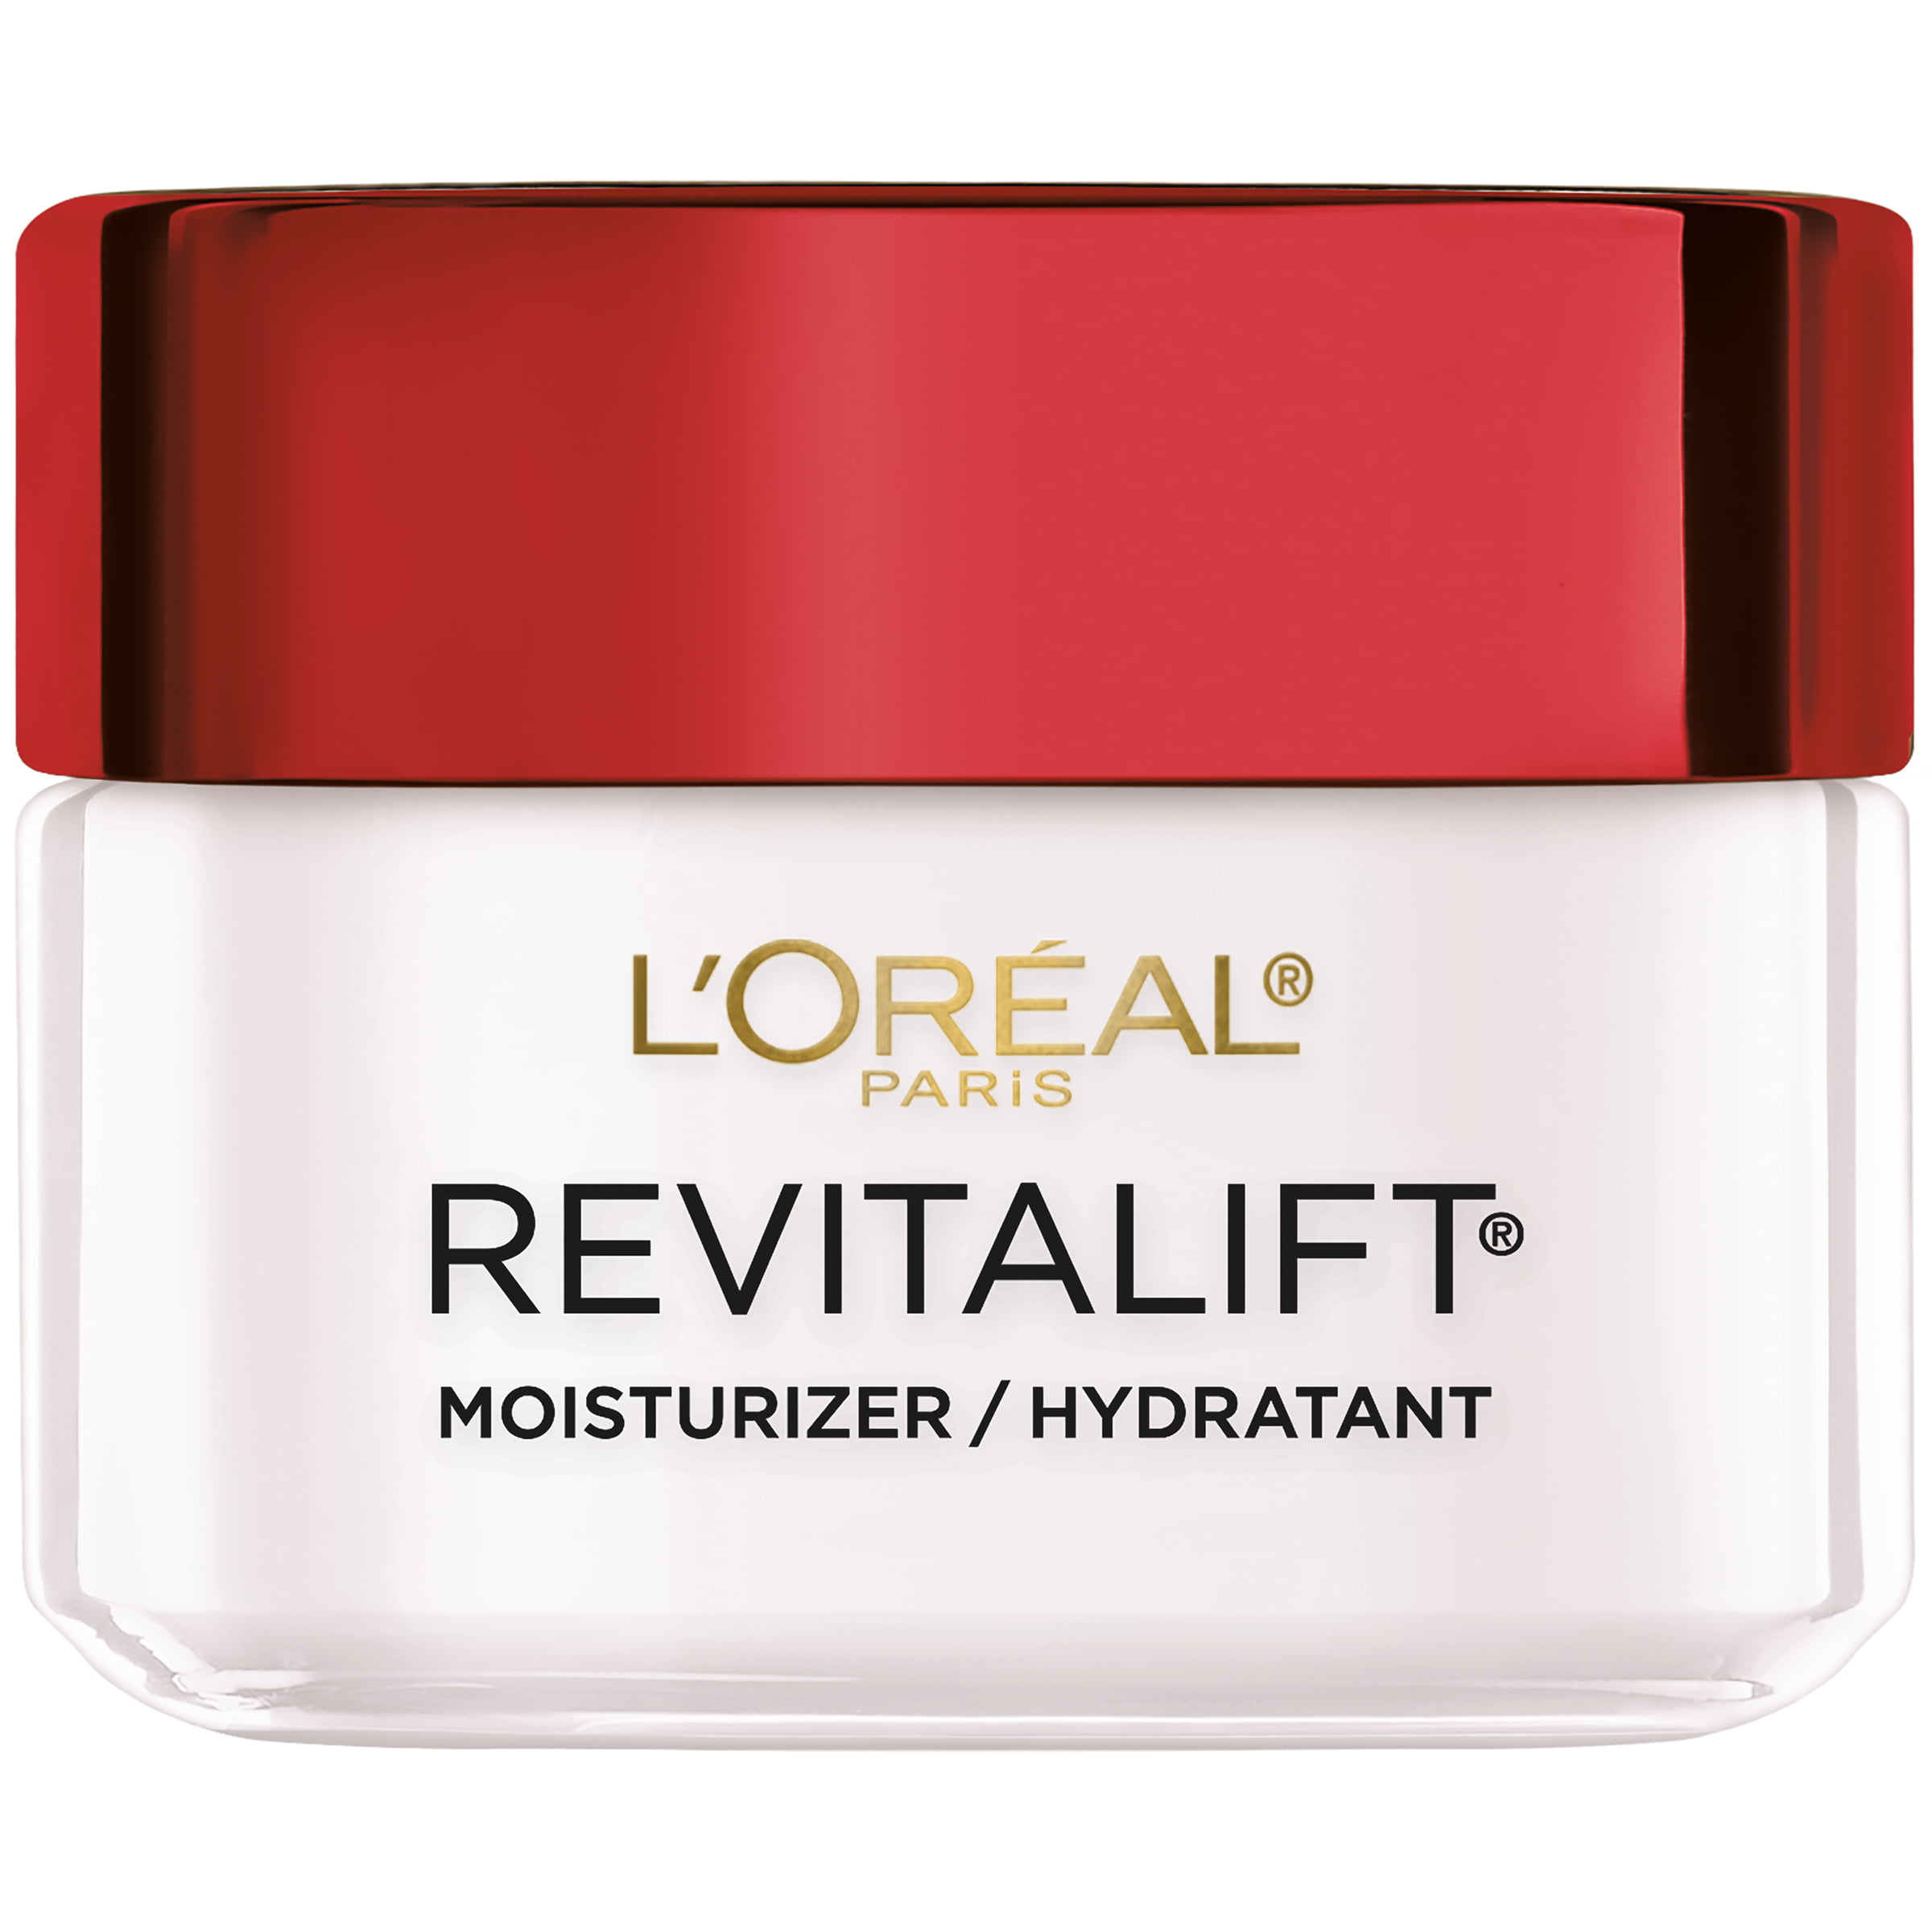 L'Oreal Paris Revitalift Anti-Wrinkle + Firming Day Face Moisturizer, 1.7 oz. - Walmart.com - Walmart.com